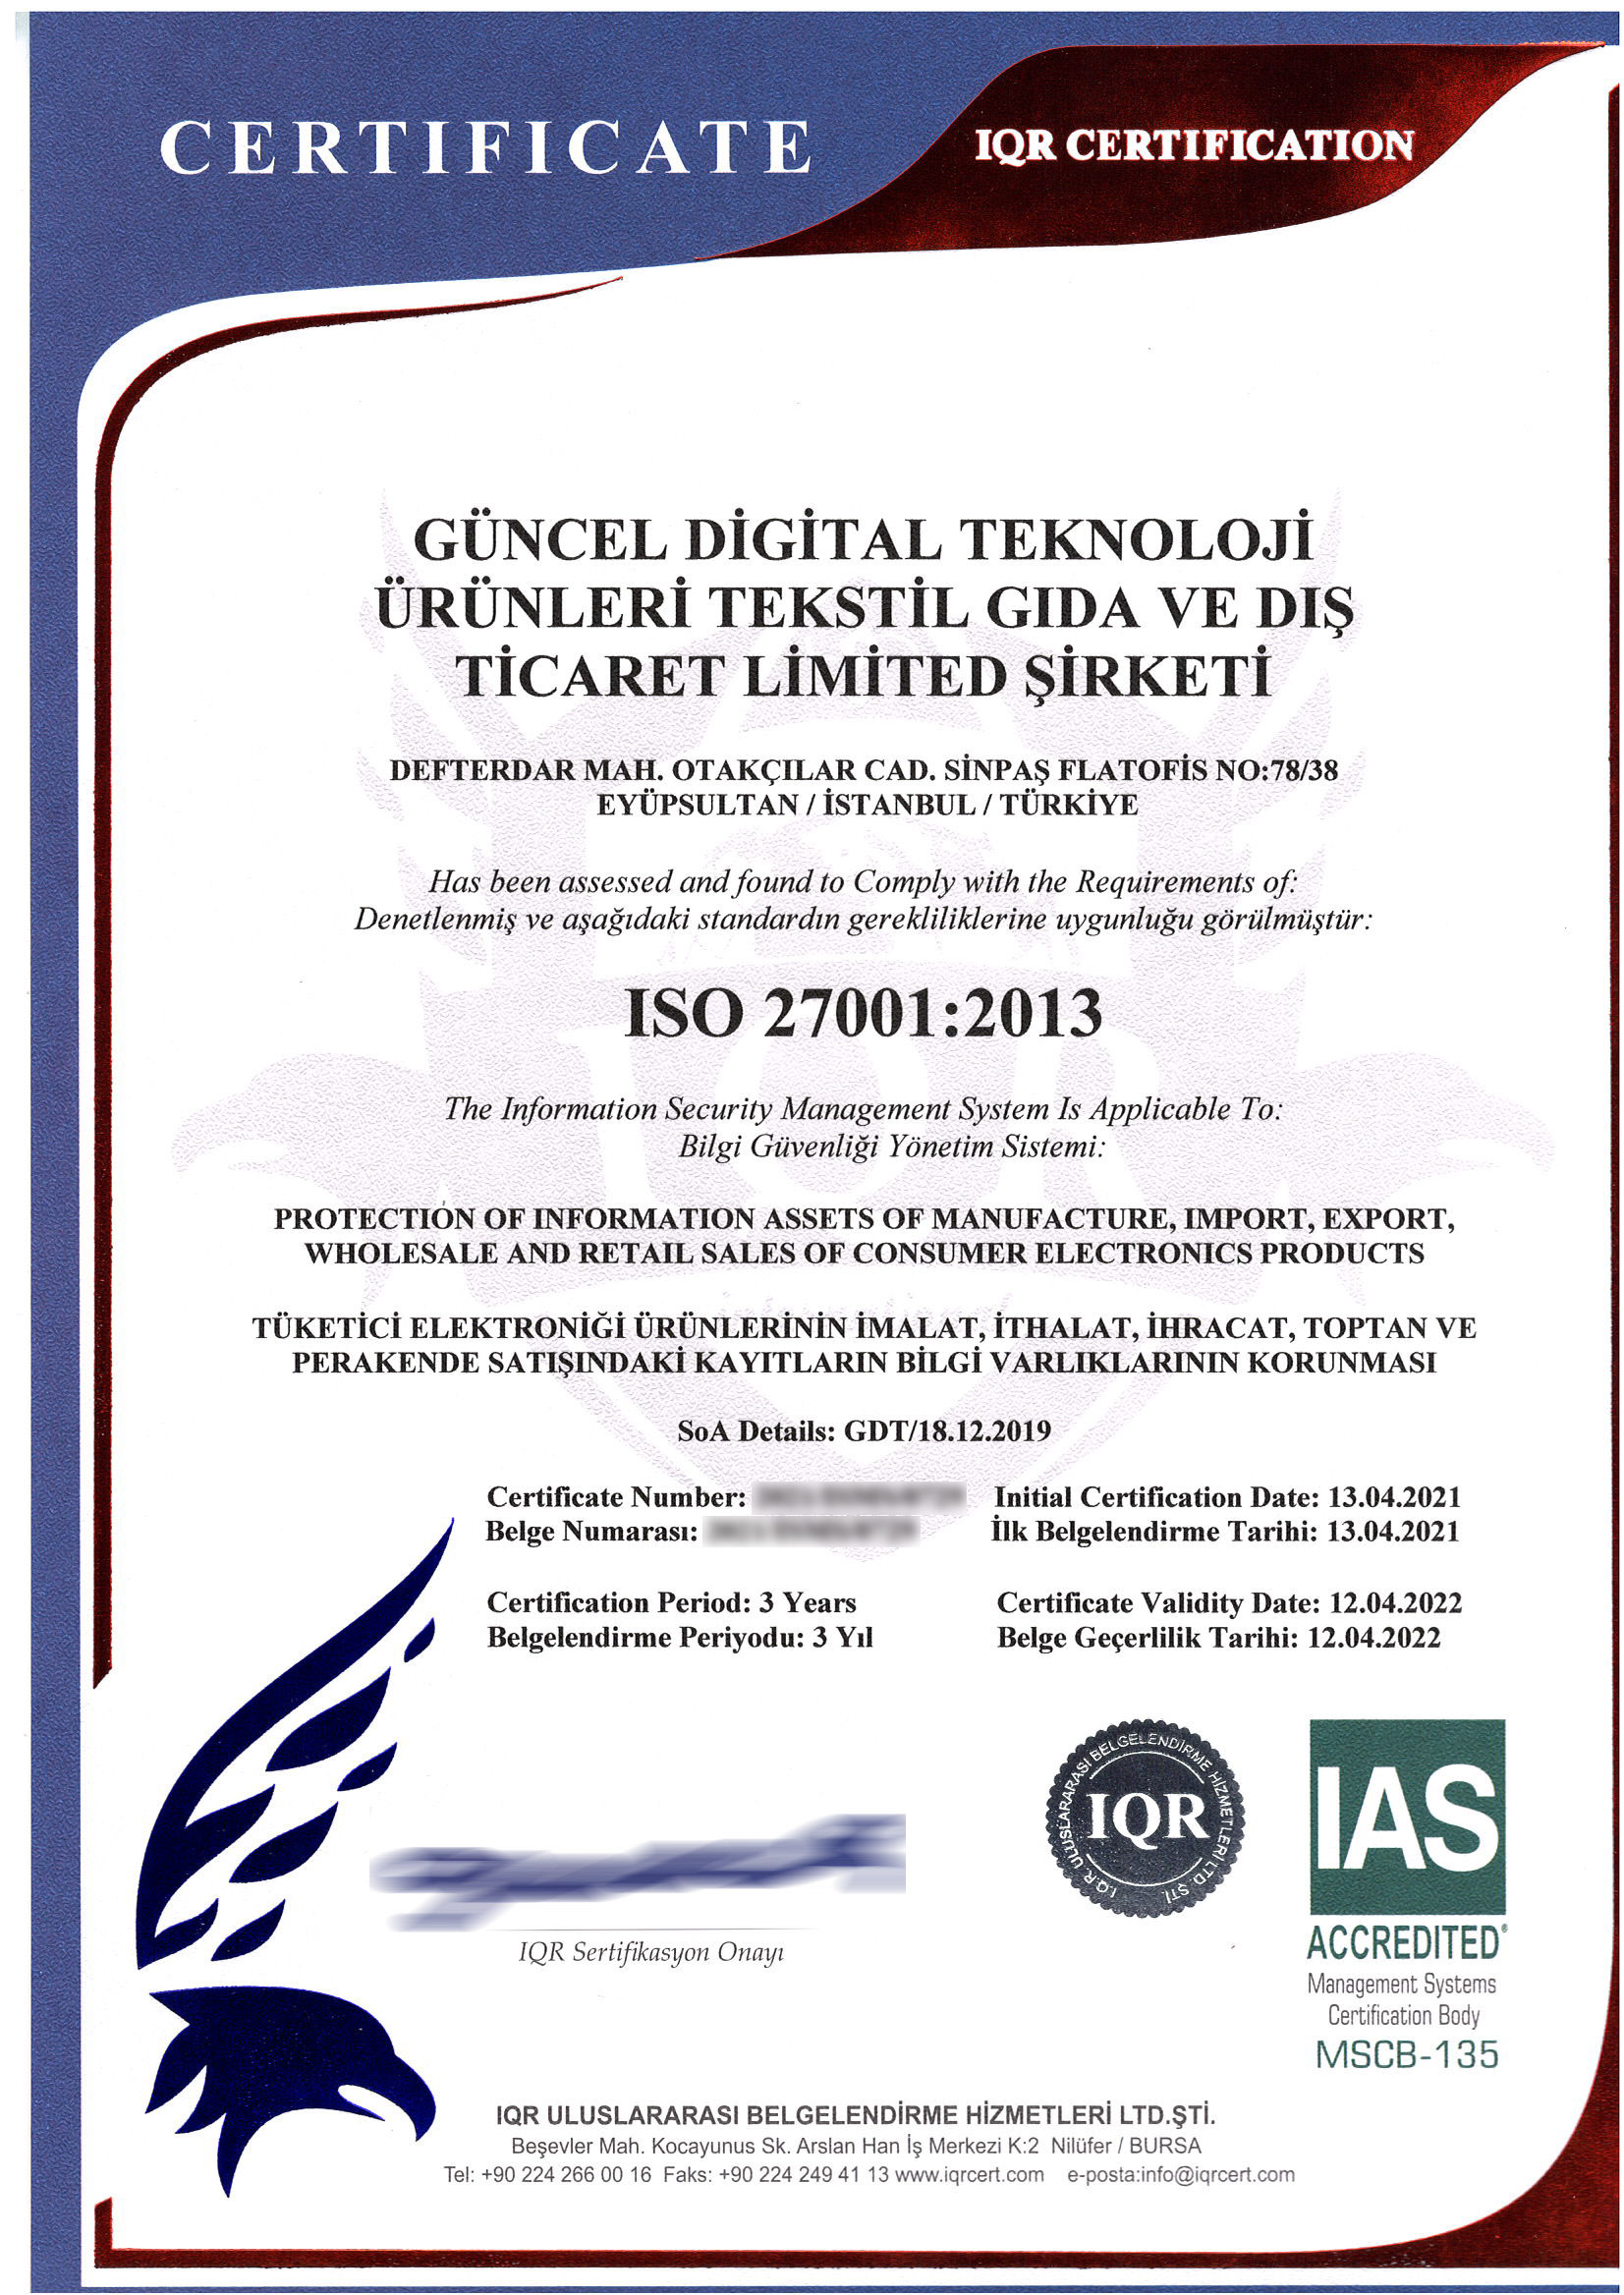 GÃ_NCEL DIGITAL ISO 27001_e.jpg (712 KB)